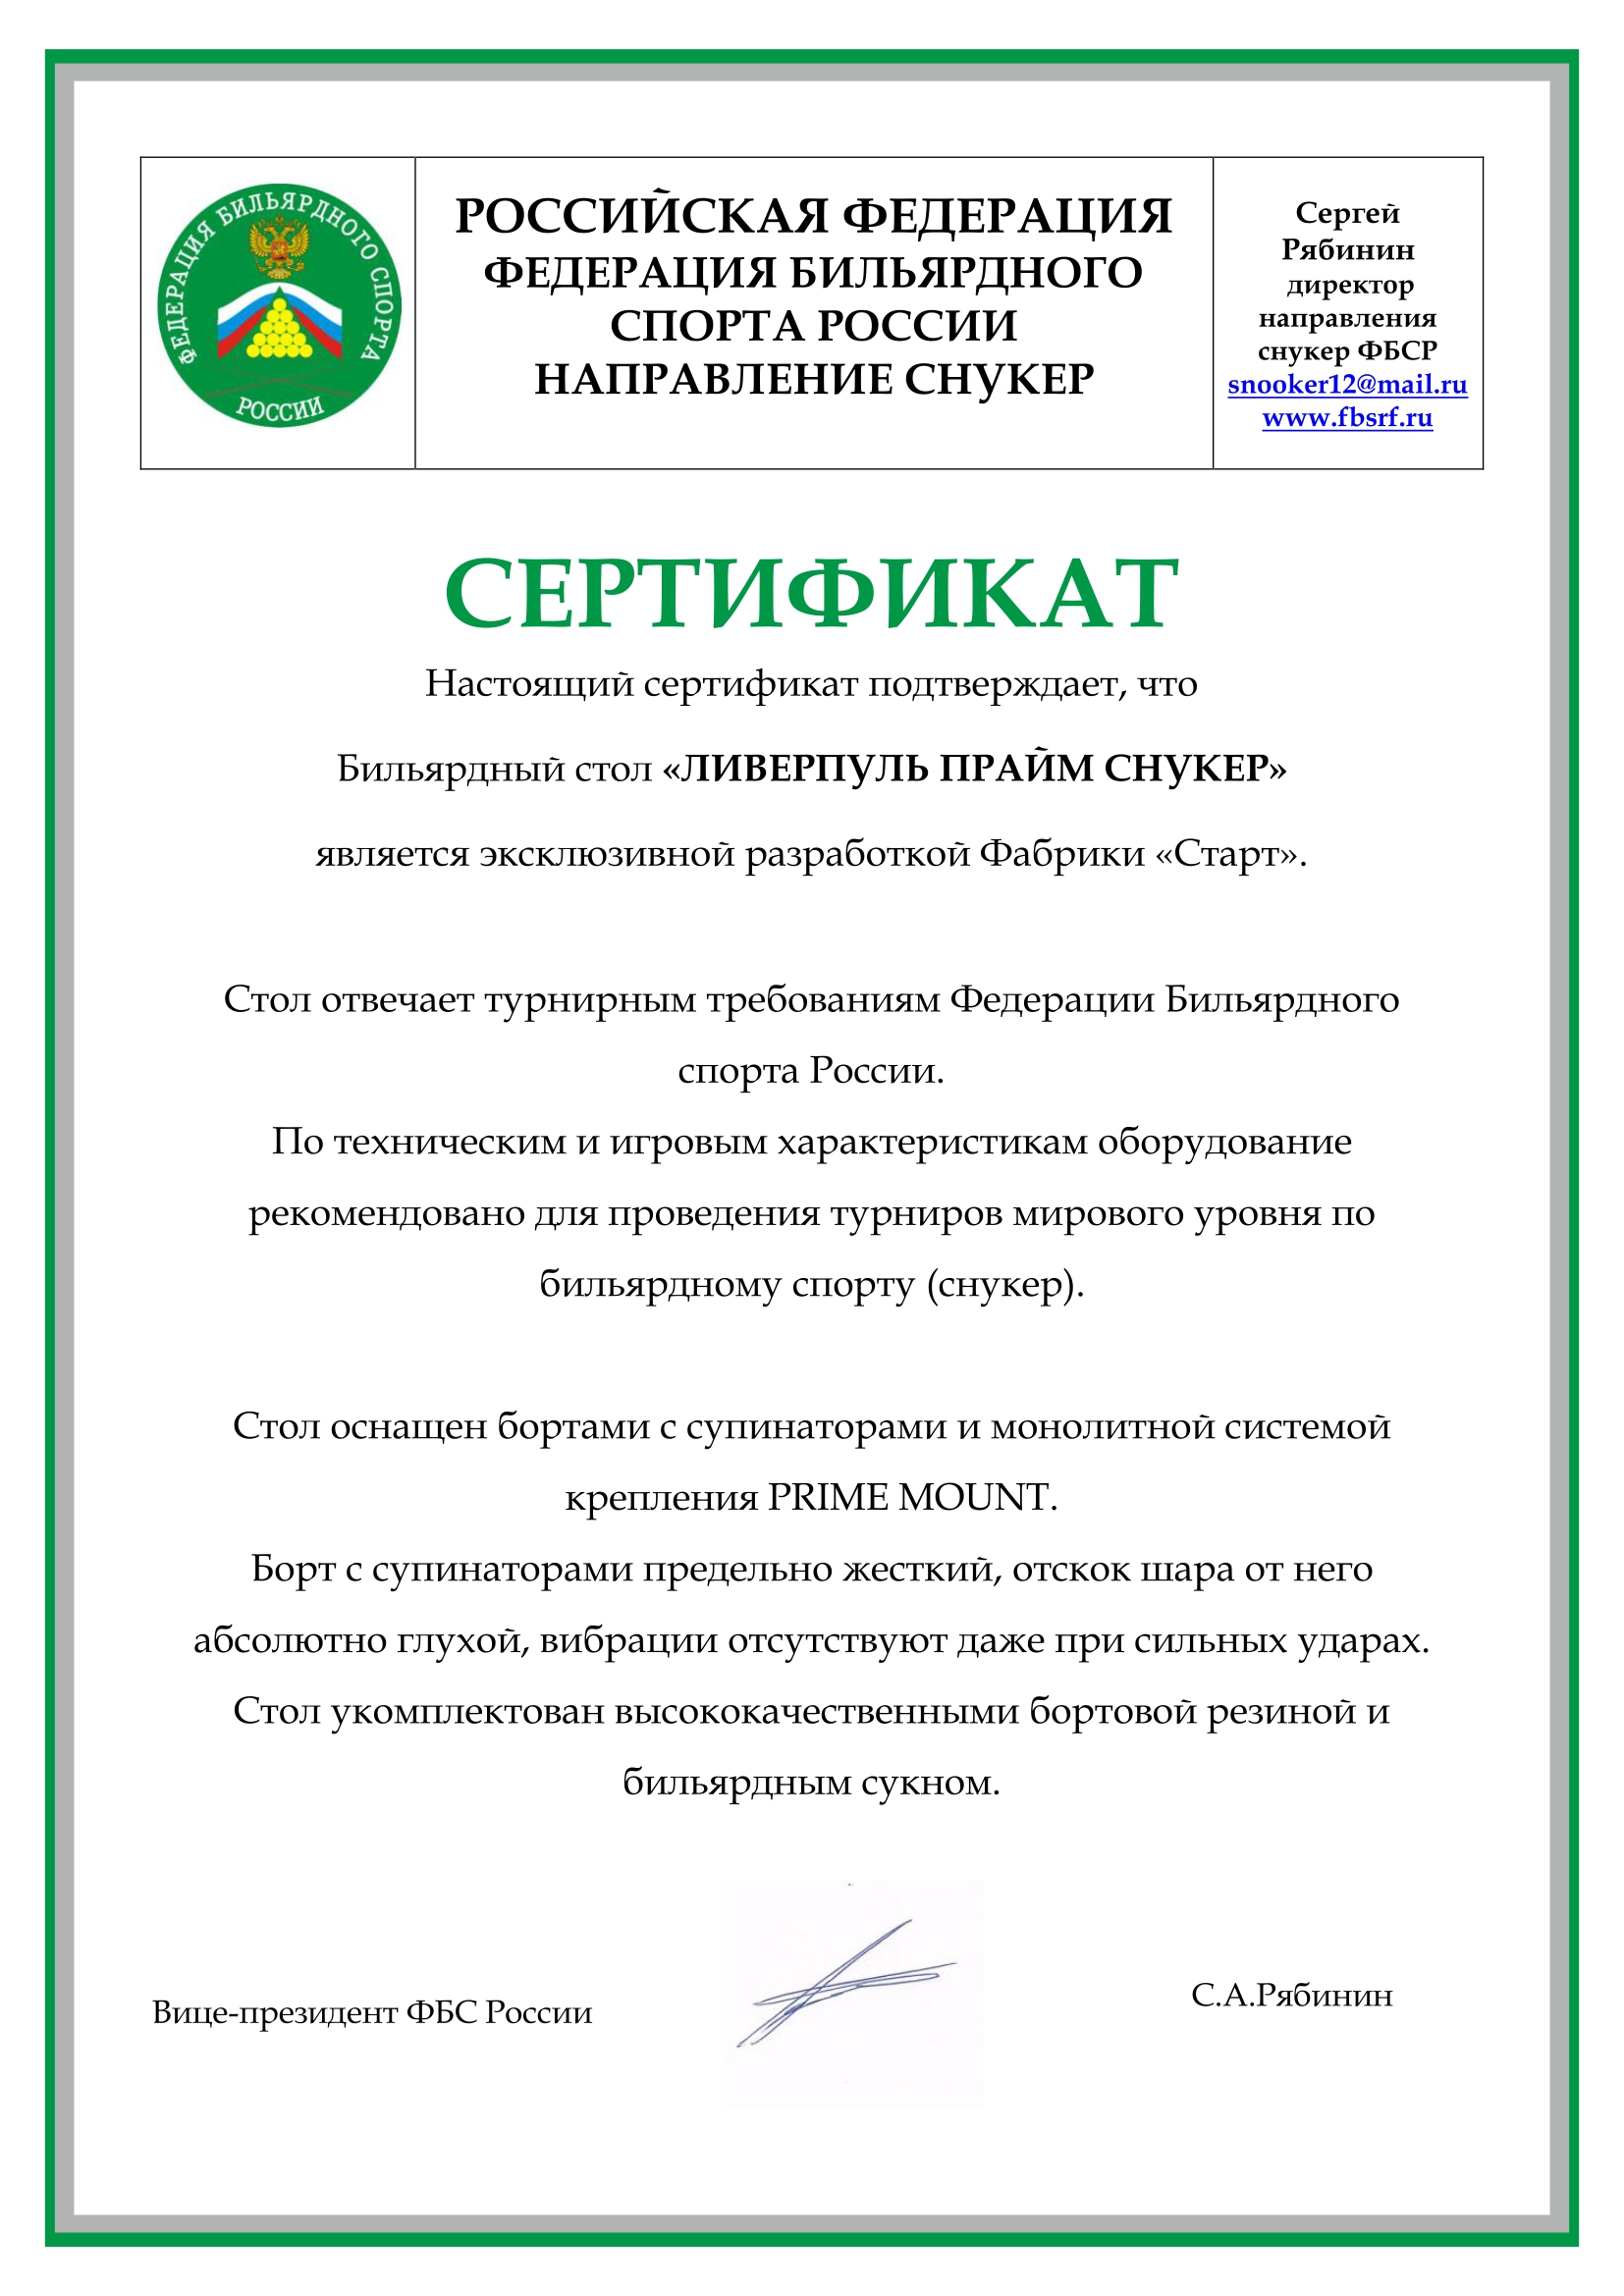 Сертификат_ФБСР_ЛИВЕРПУЛЬ ПРАЙМ СНУКЕР.jpg